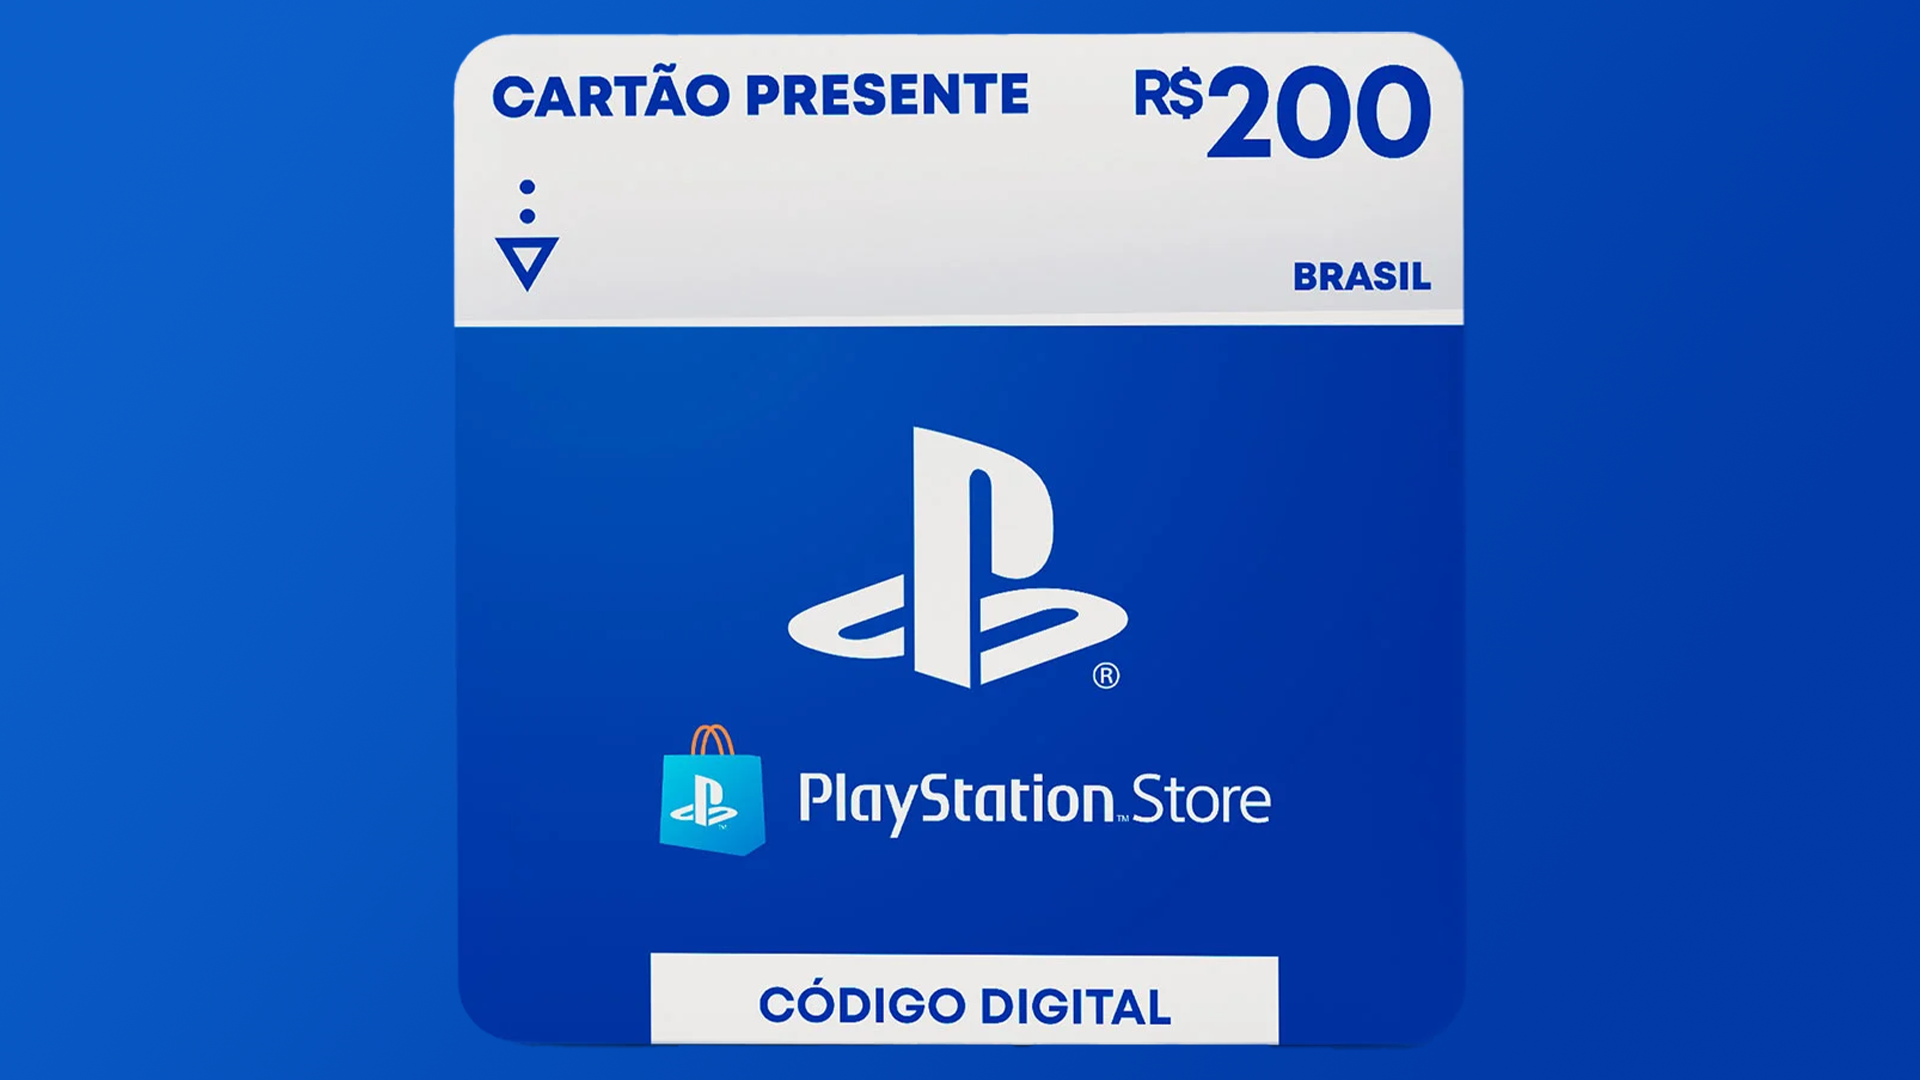 R$200 PlayStation Store - Cartão Presente Digital [Exclusivo Brasil]